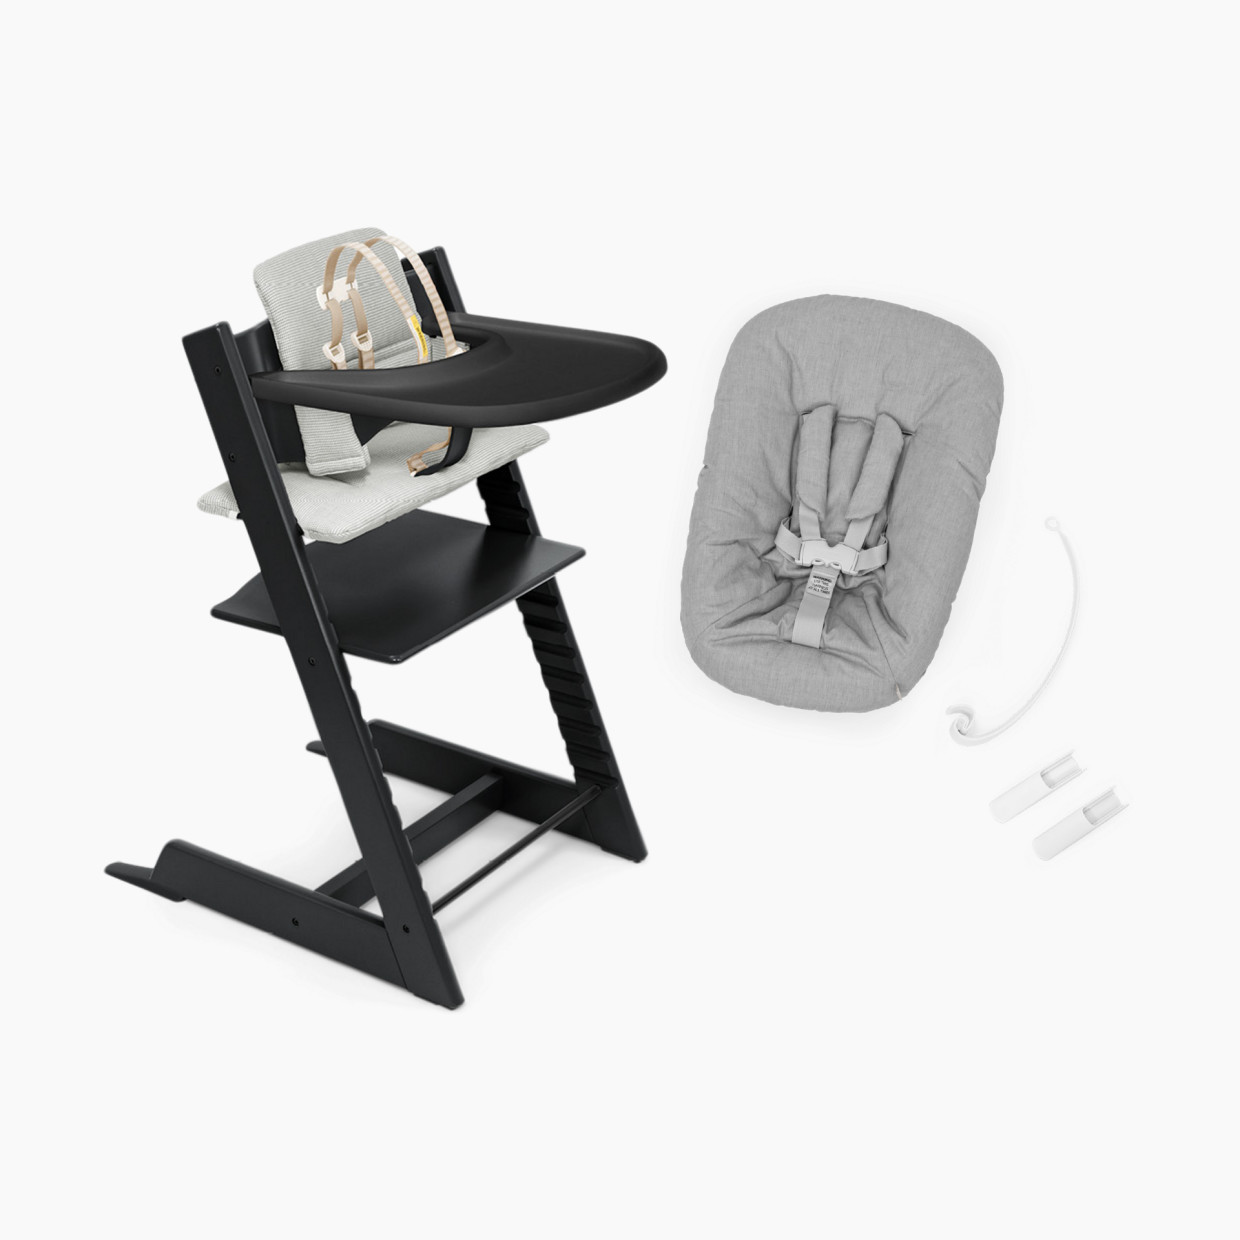 Stokke Tripp Trapp High Chair Complete + Newborn Set - Black/Nordic Grey/Black Tray.